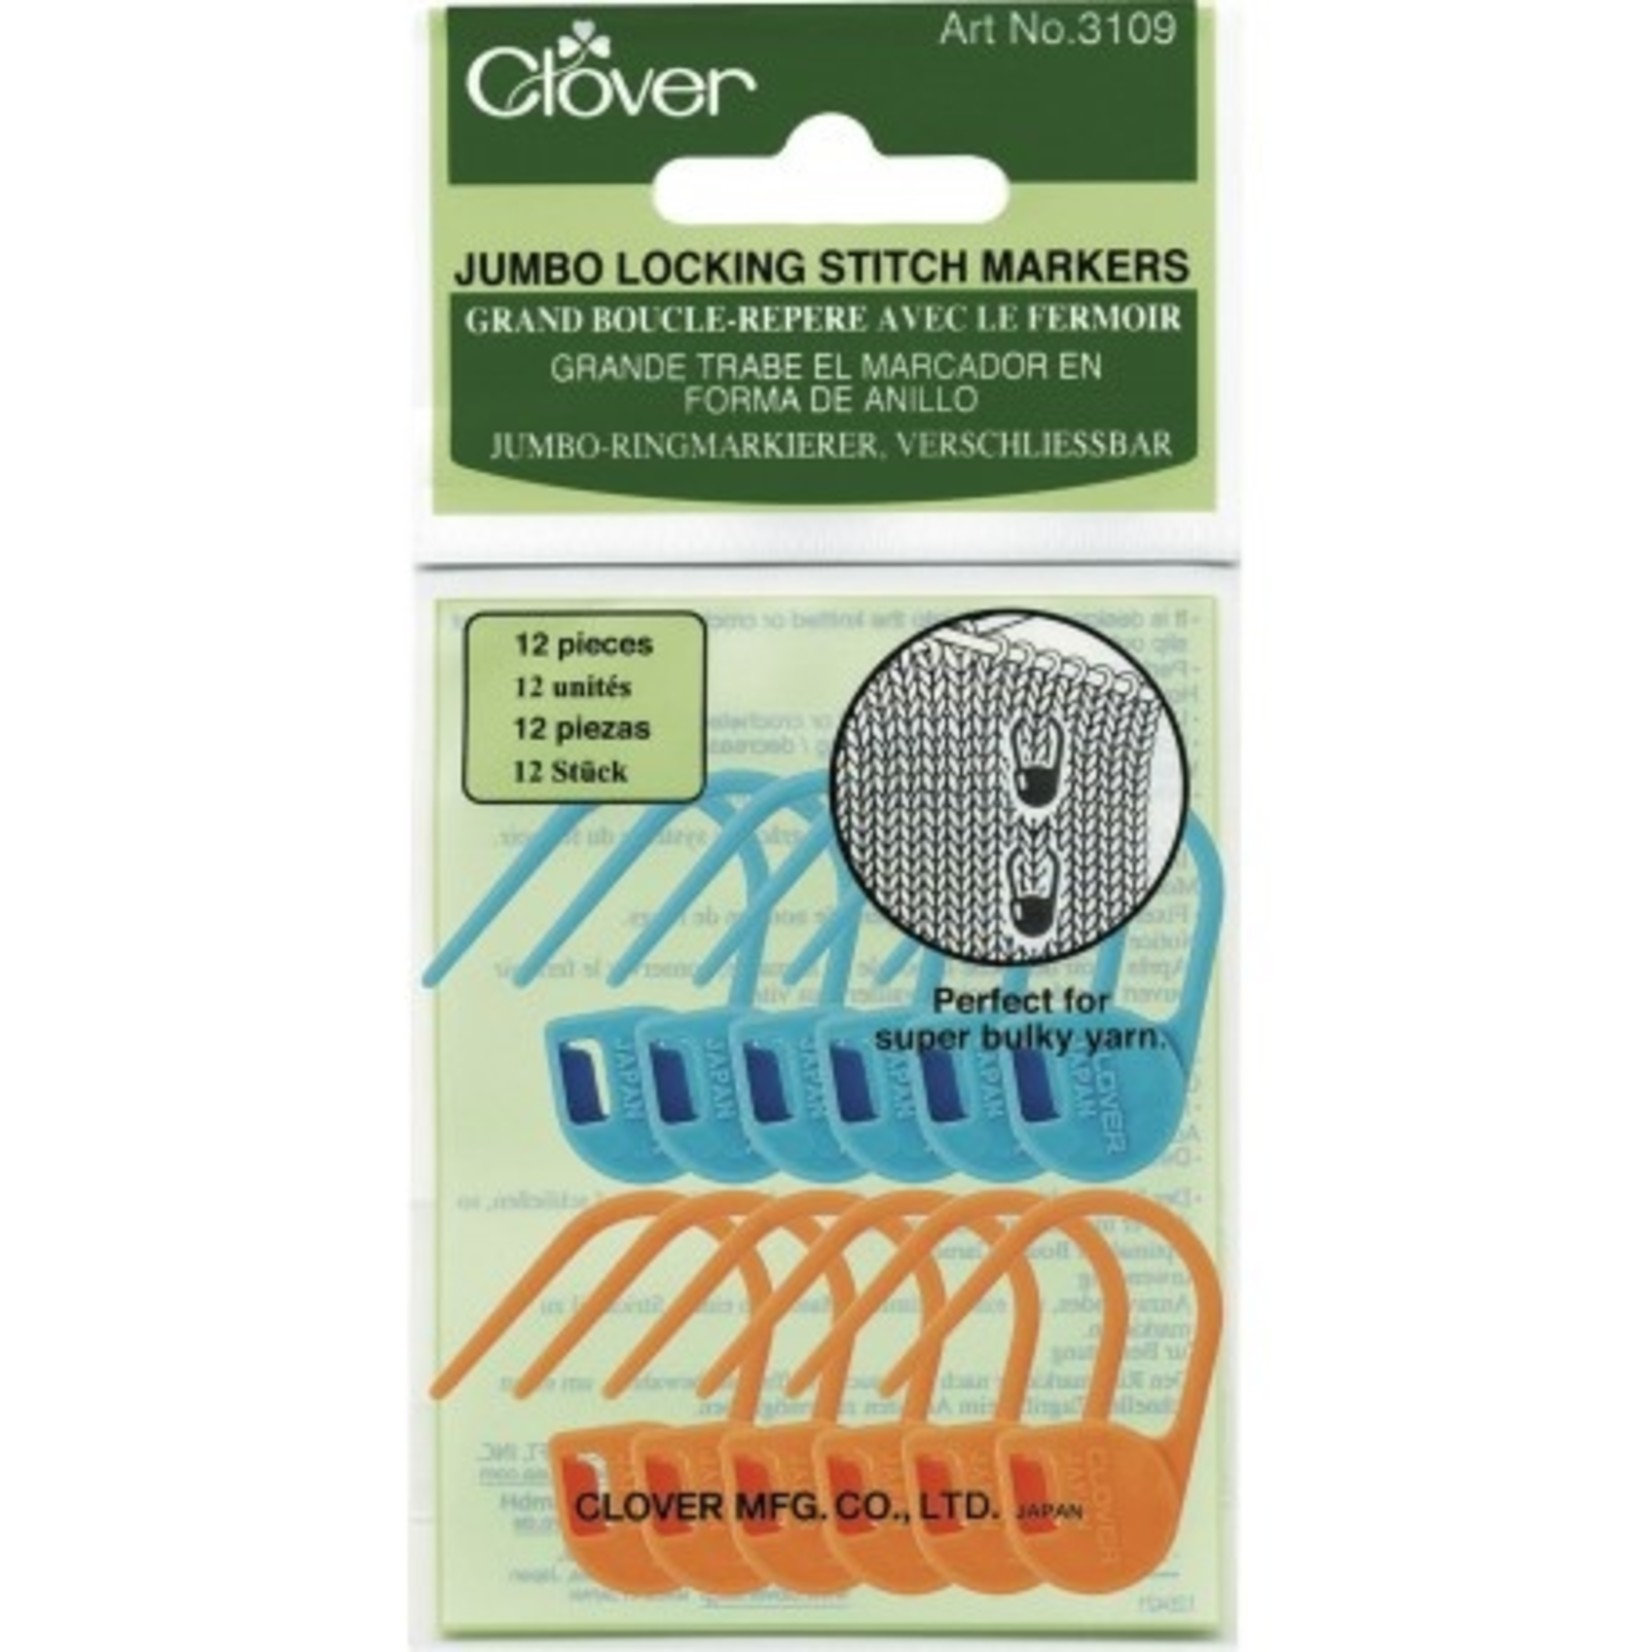 Clover Jumbo Locking Stitch Marker 3109